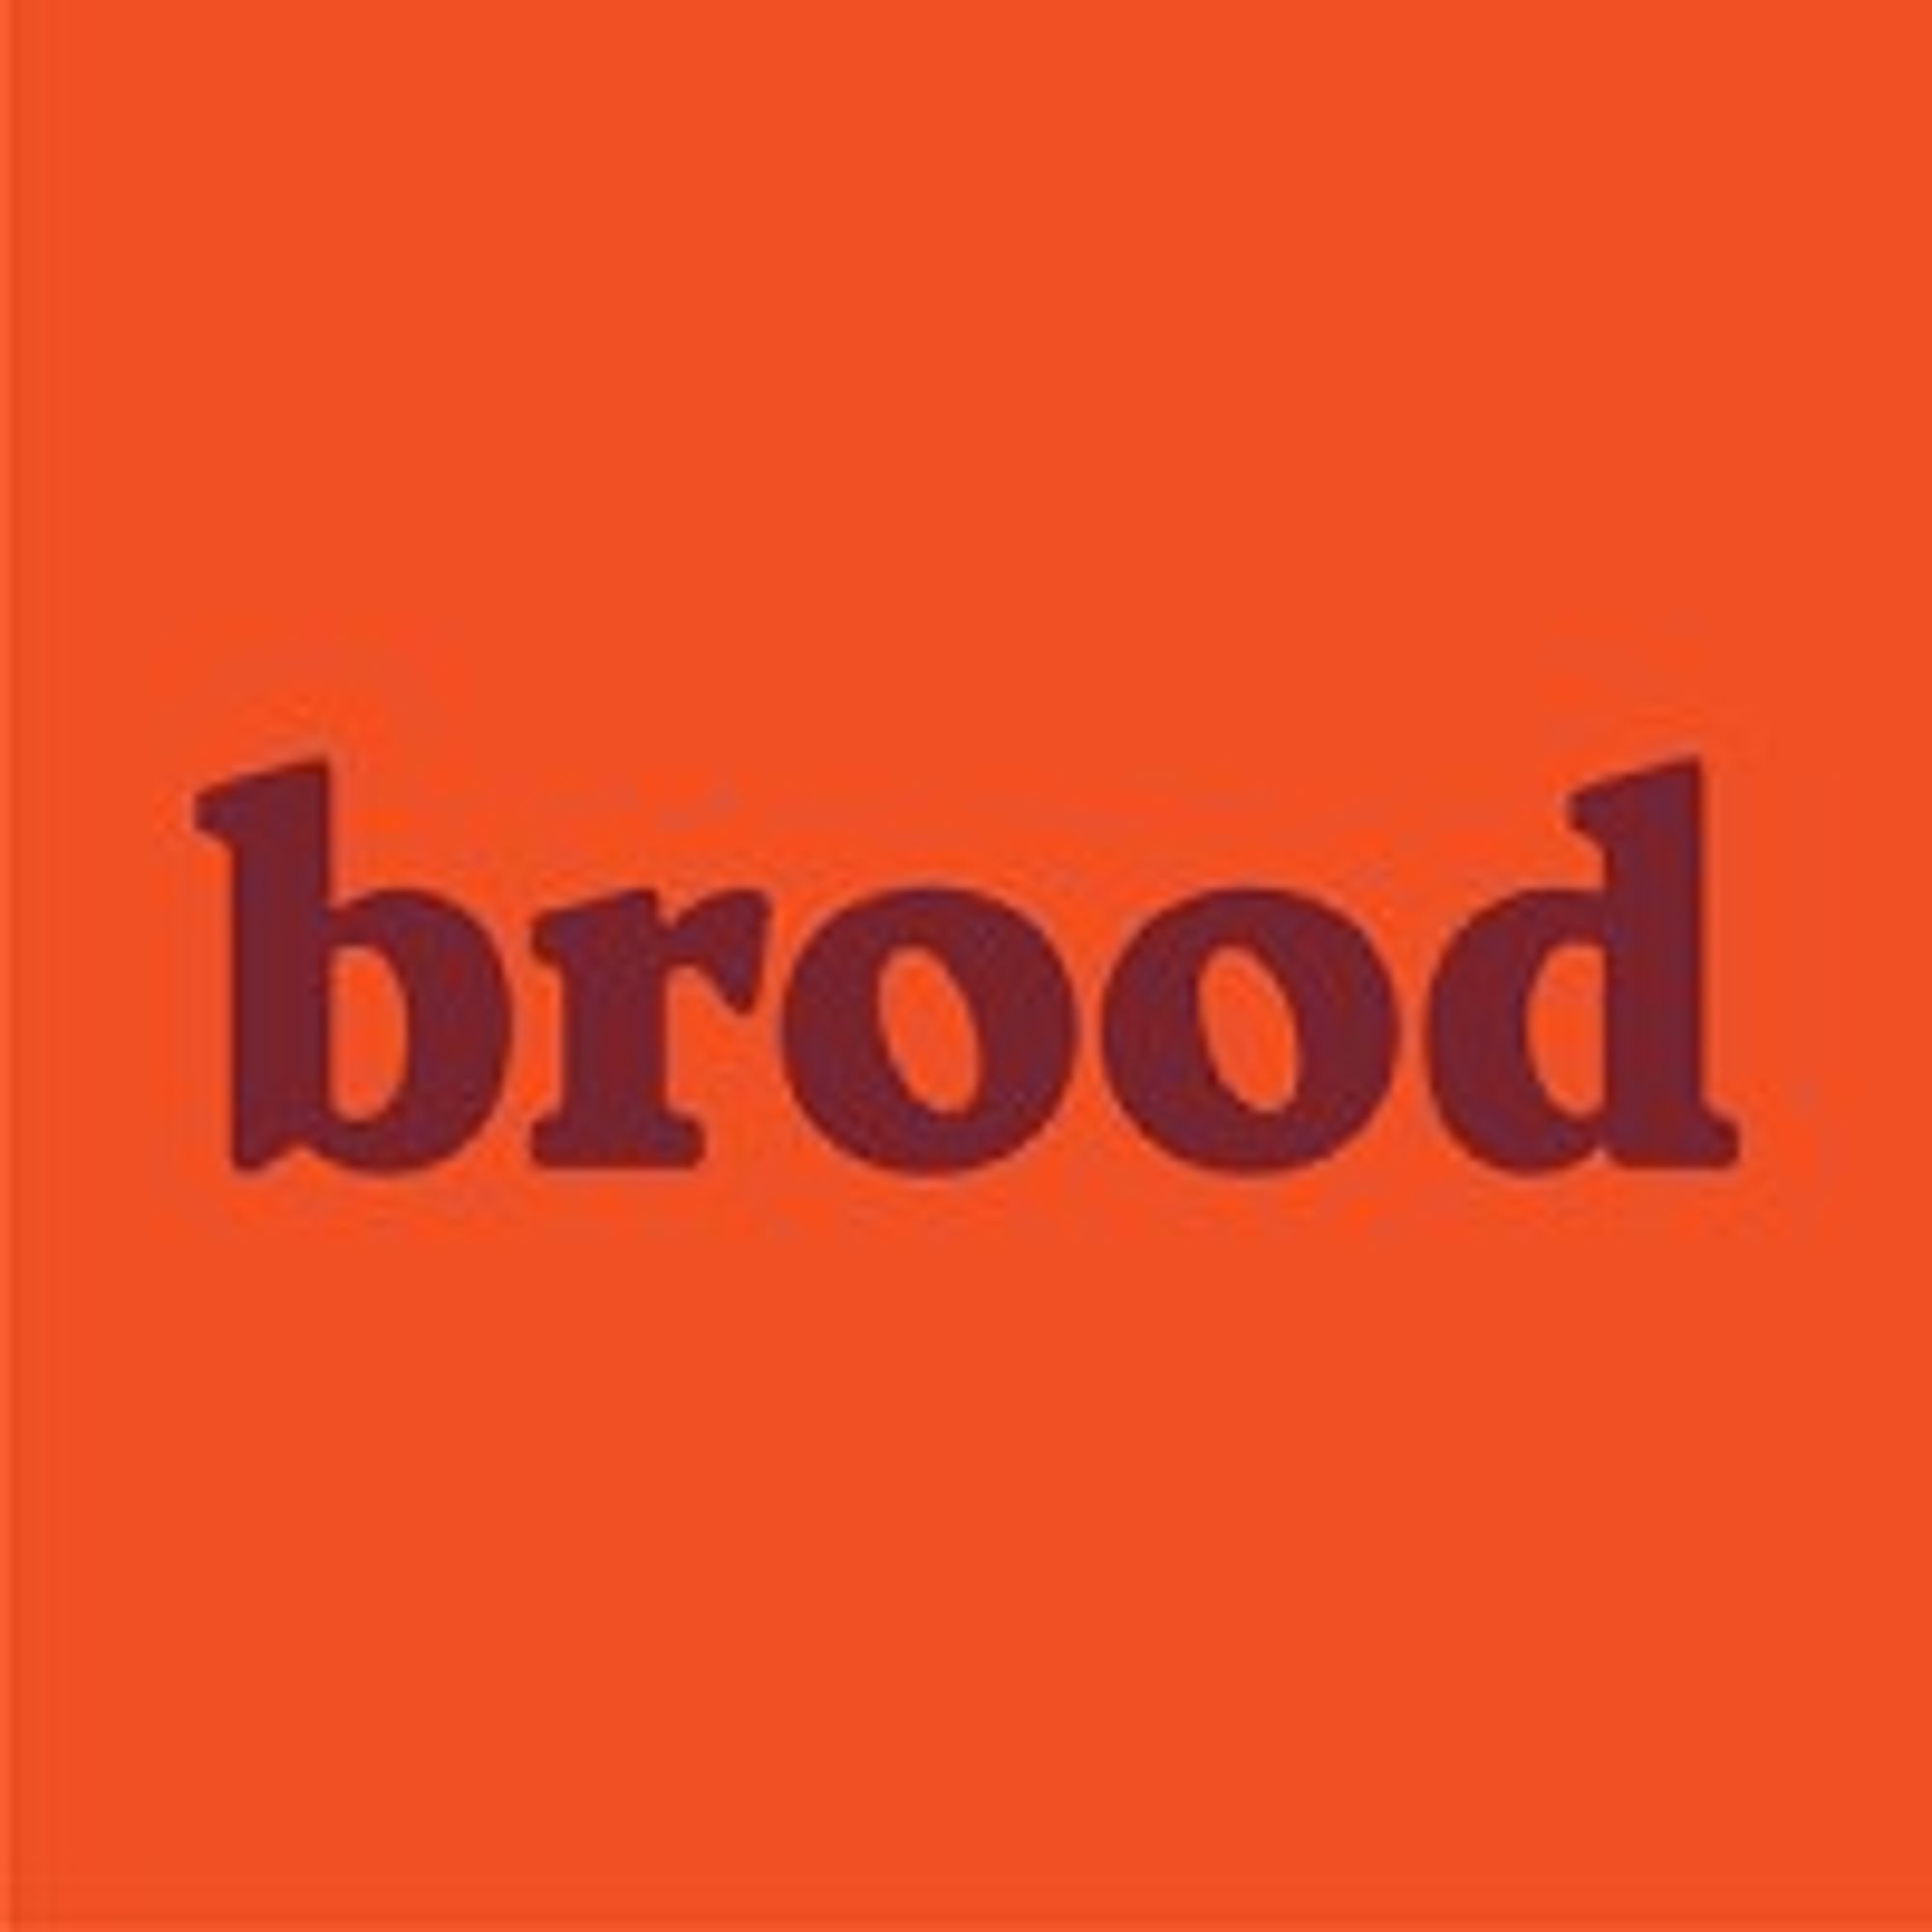 Brood Care Inc